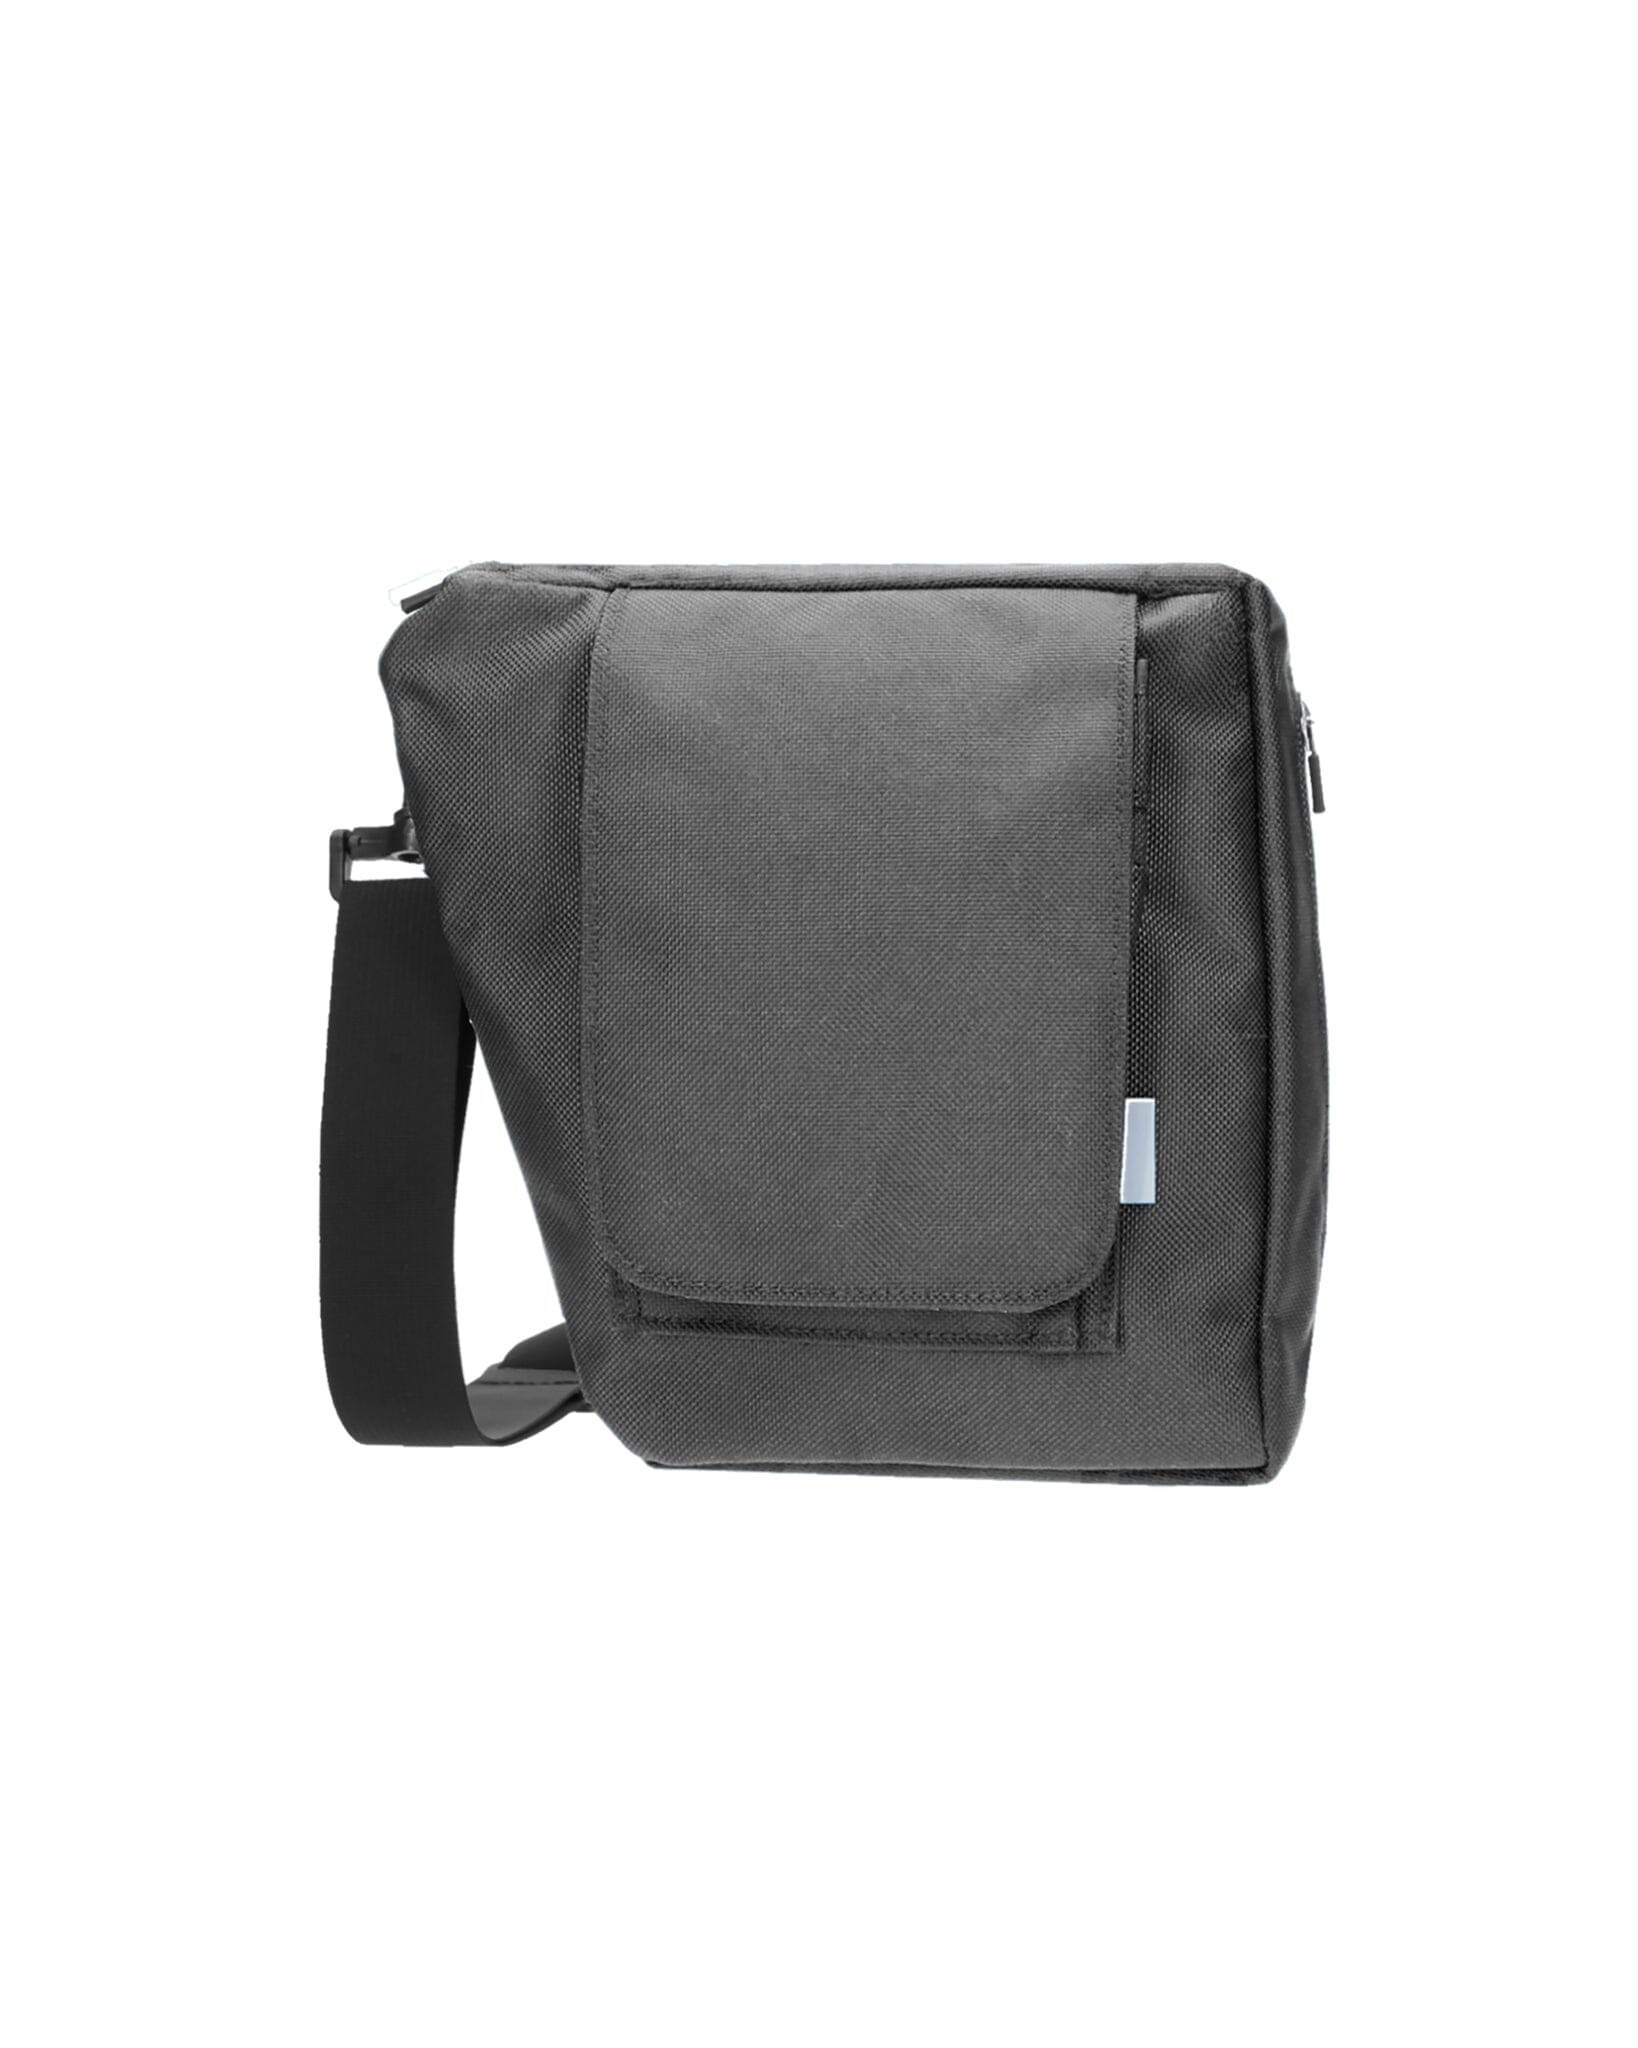 Small Carry - Grey Matter Bag bolstr Grey Righty 